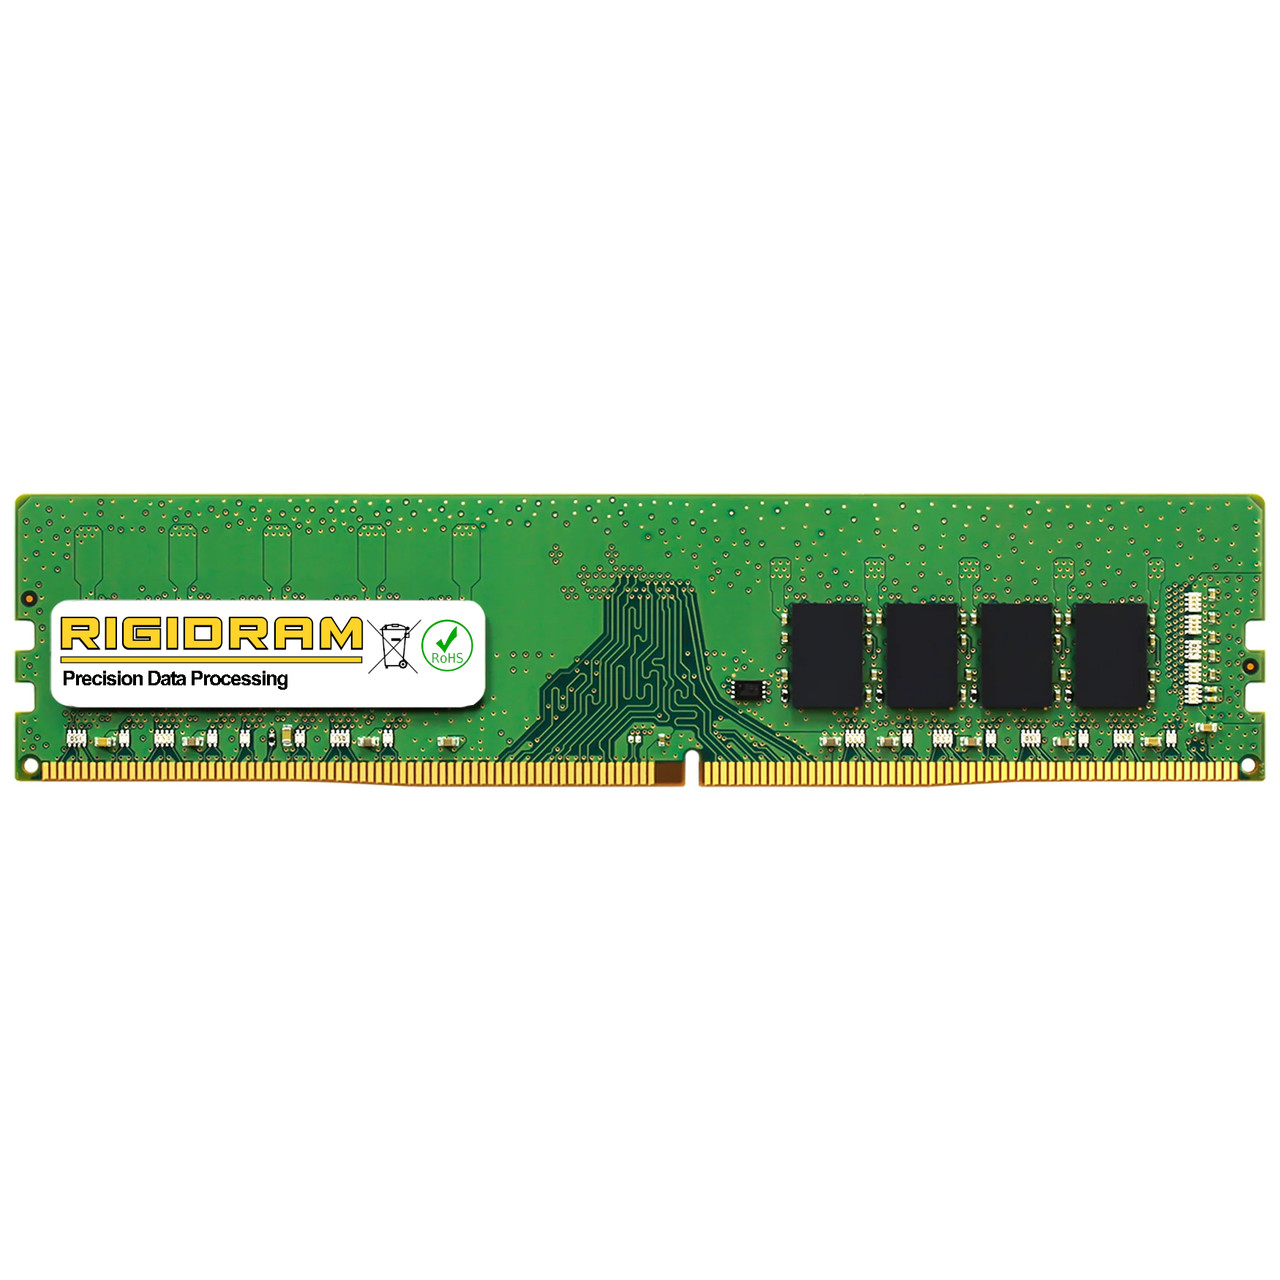 16GB RAM Dell Inspiron 3670 DDR4 Memory by RigidRAM Upgrades